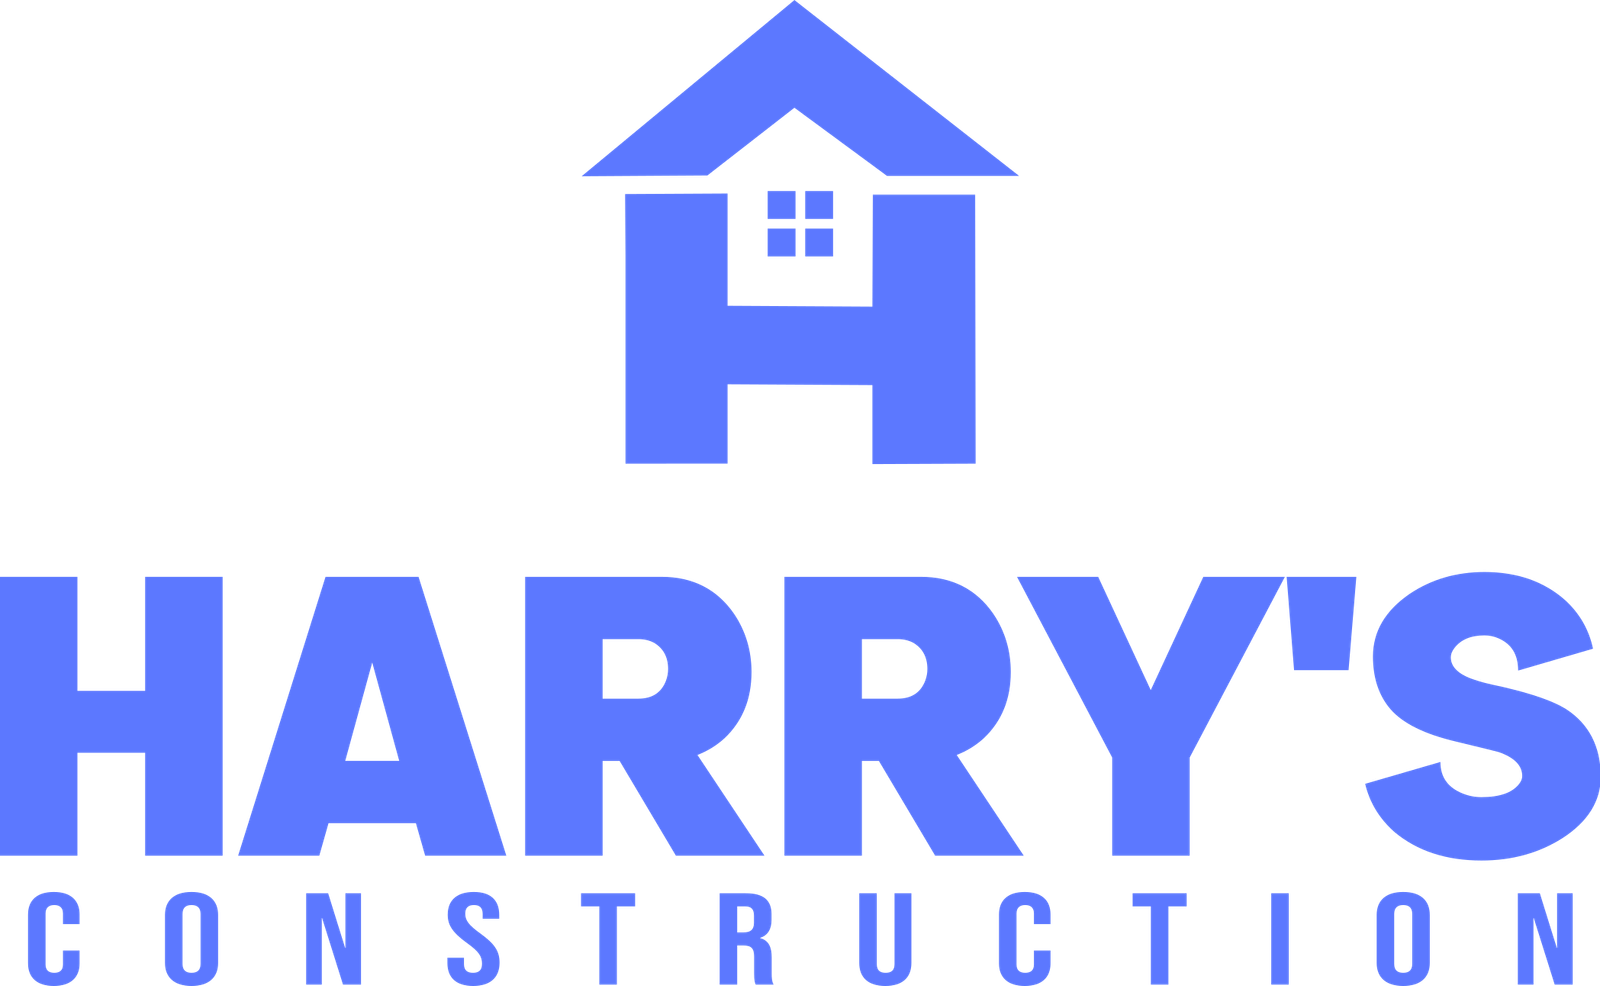 Harry’s Construction